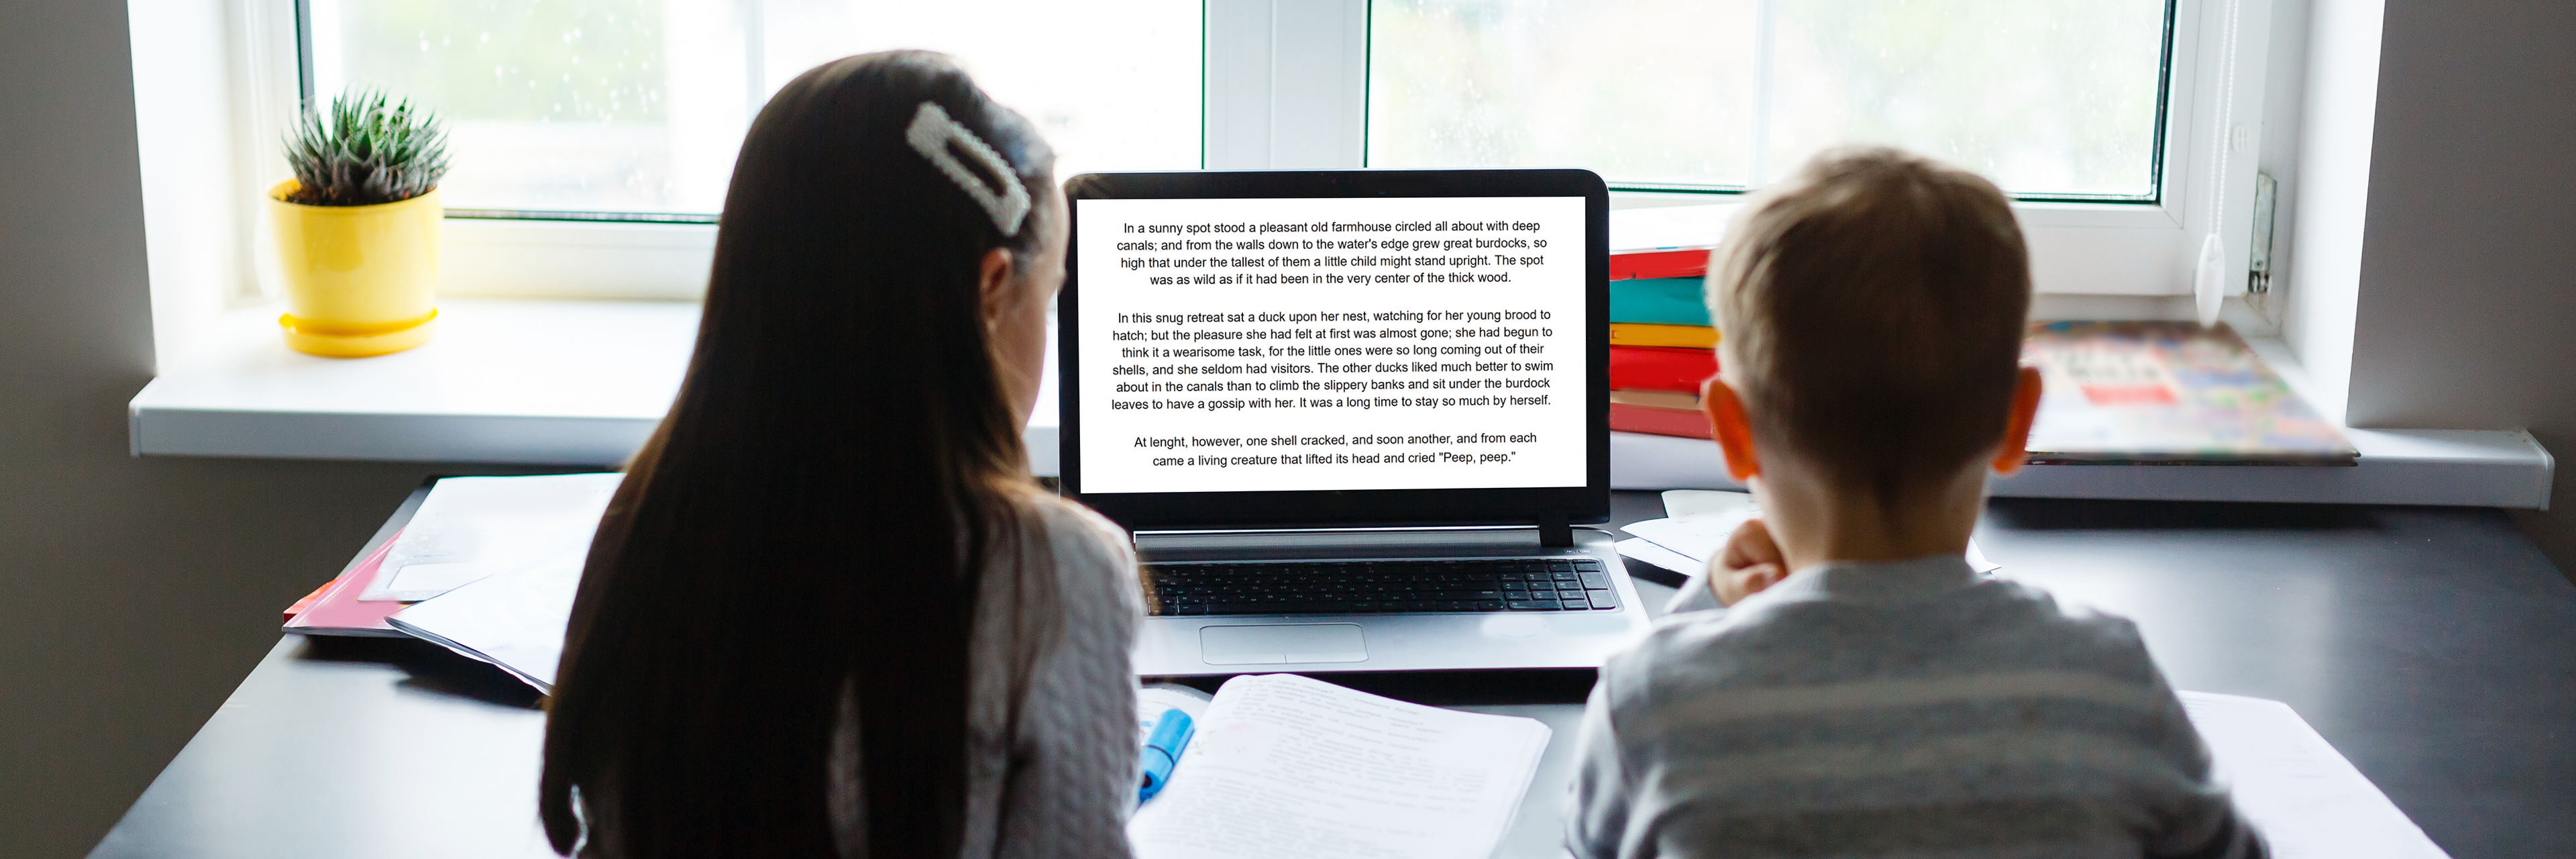 2 children reading on a laptop